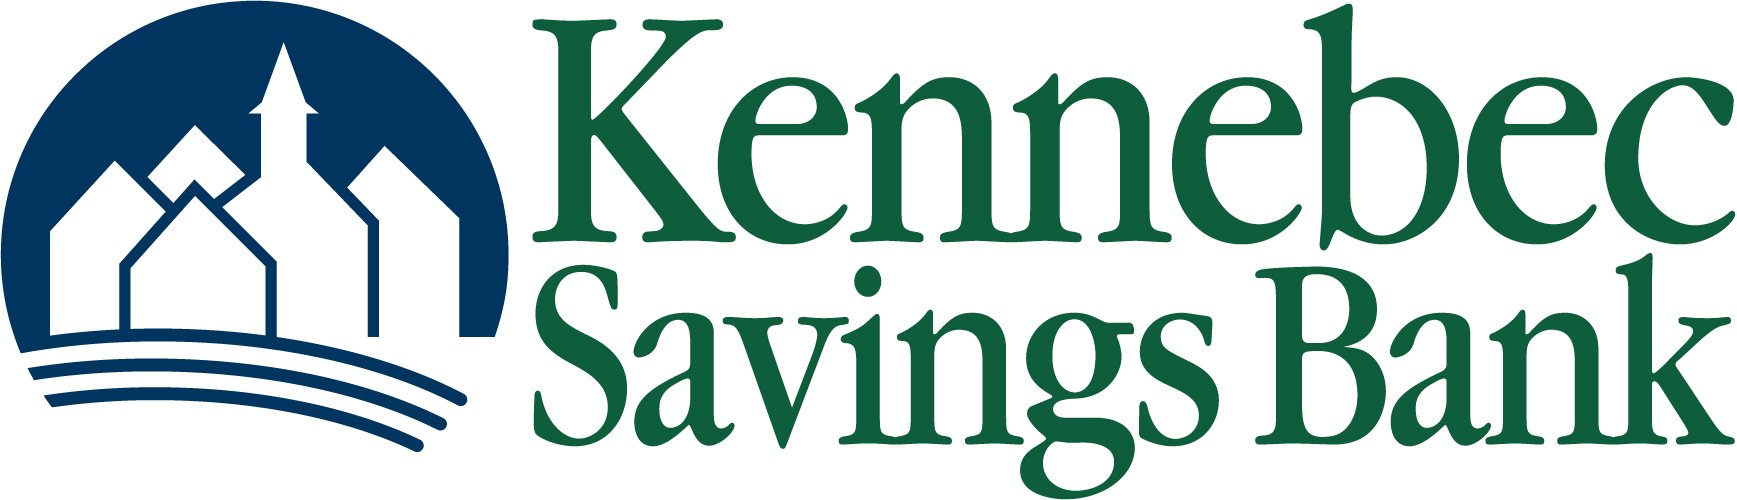 Kennebec Savings Bank.jpg